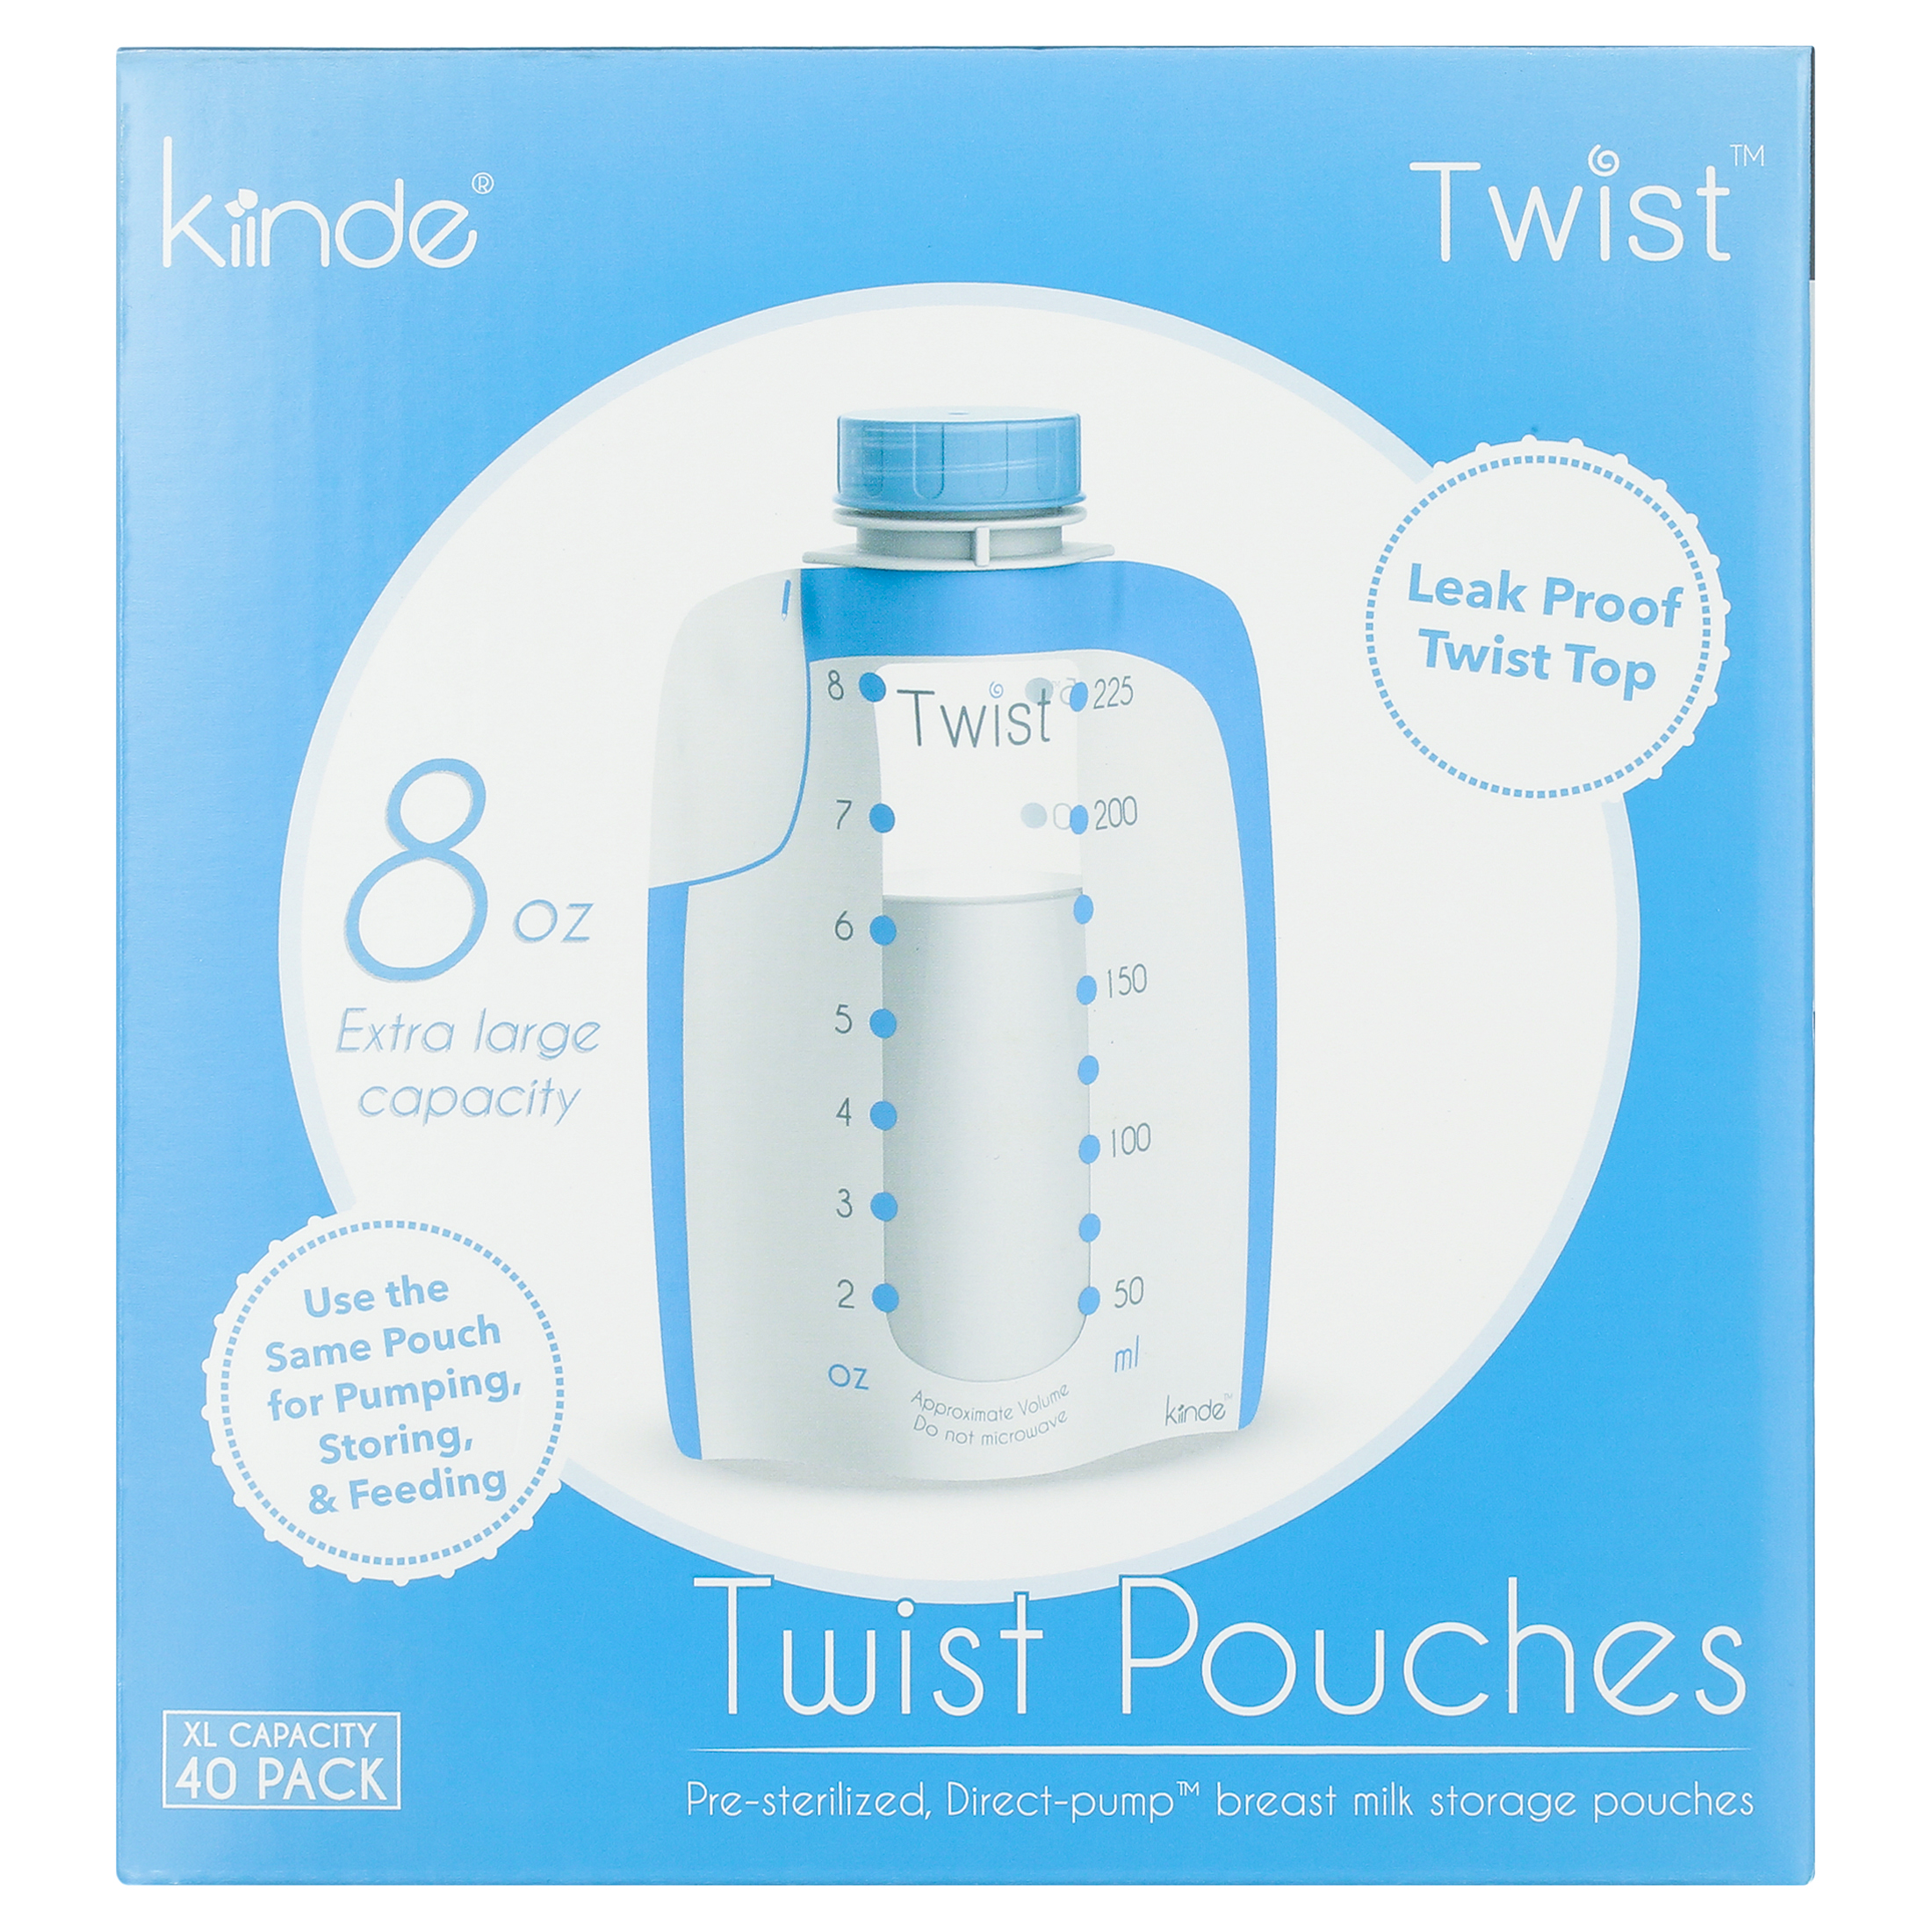 Kiinde Twist Pouches, Direct-pump, Twist - image 2 of 9